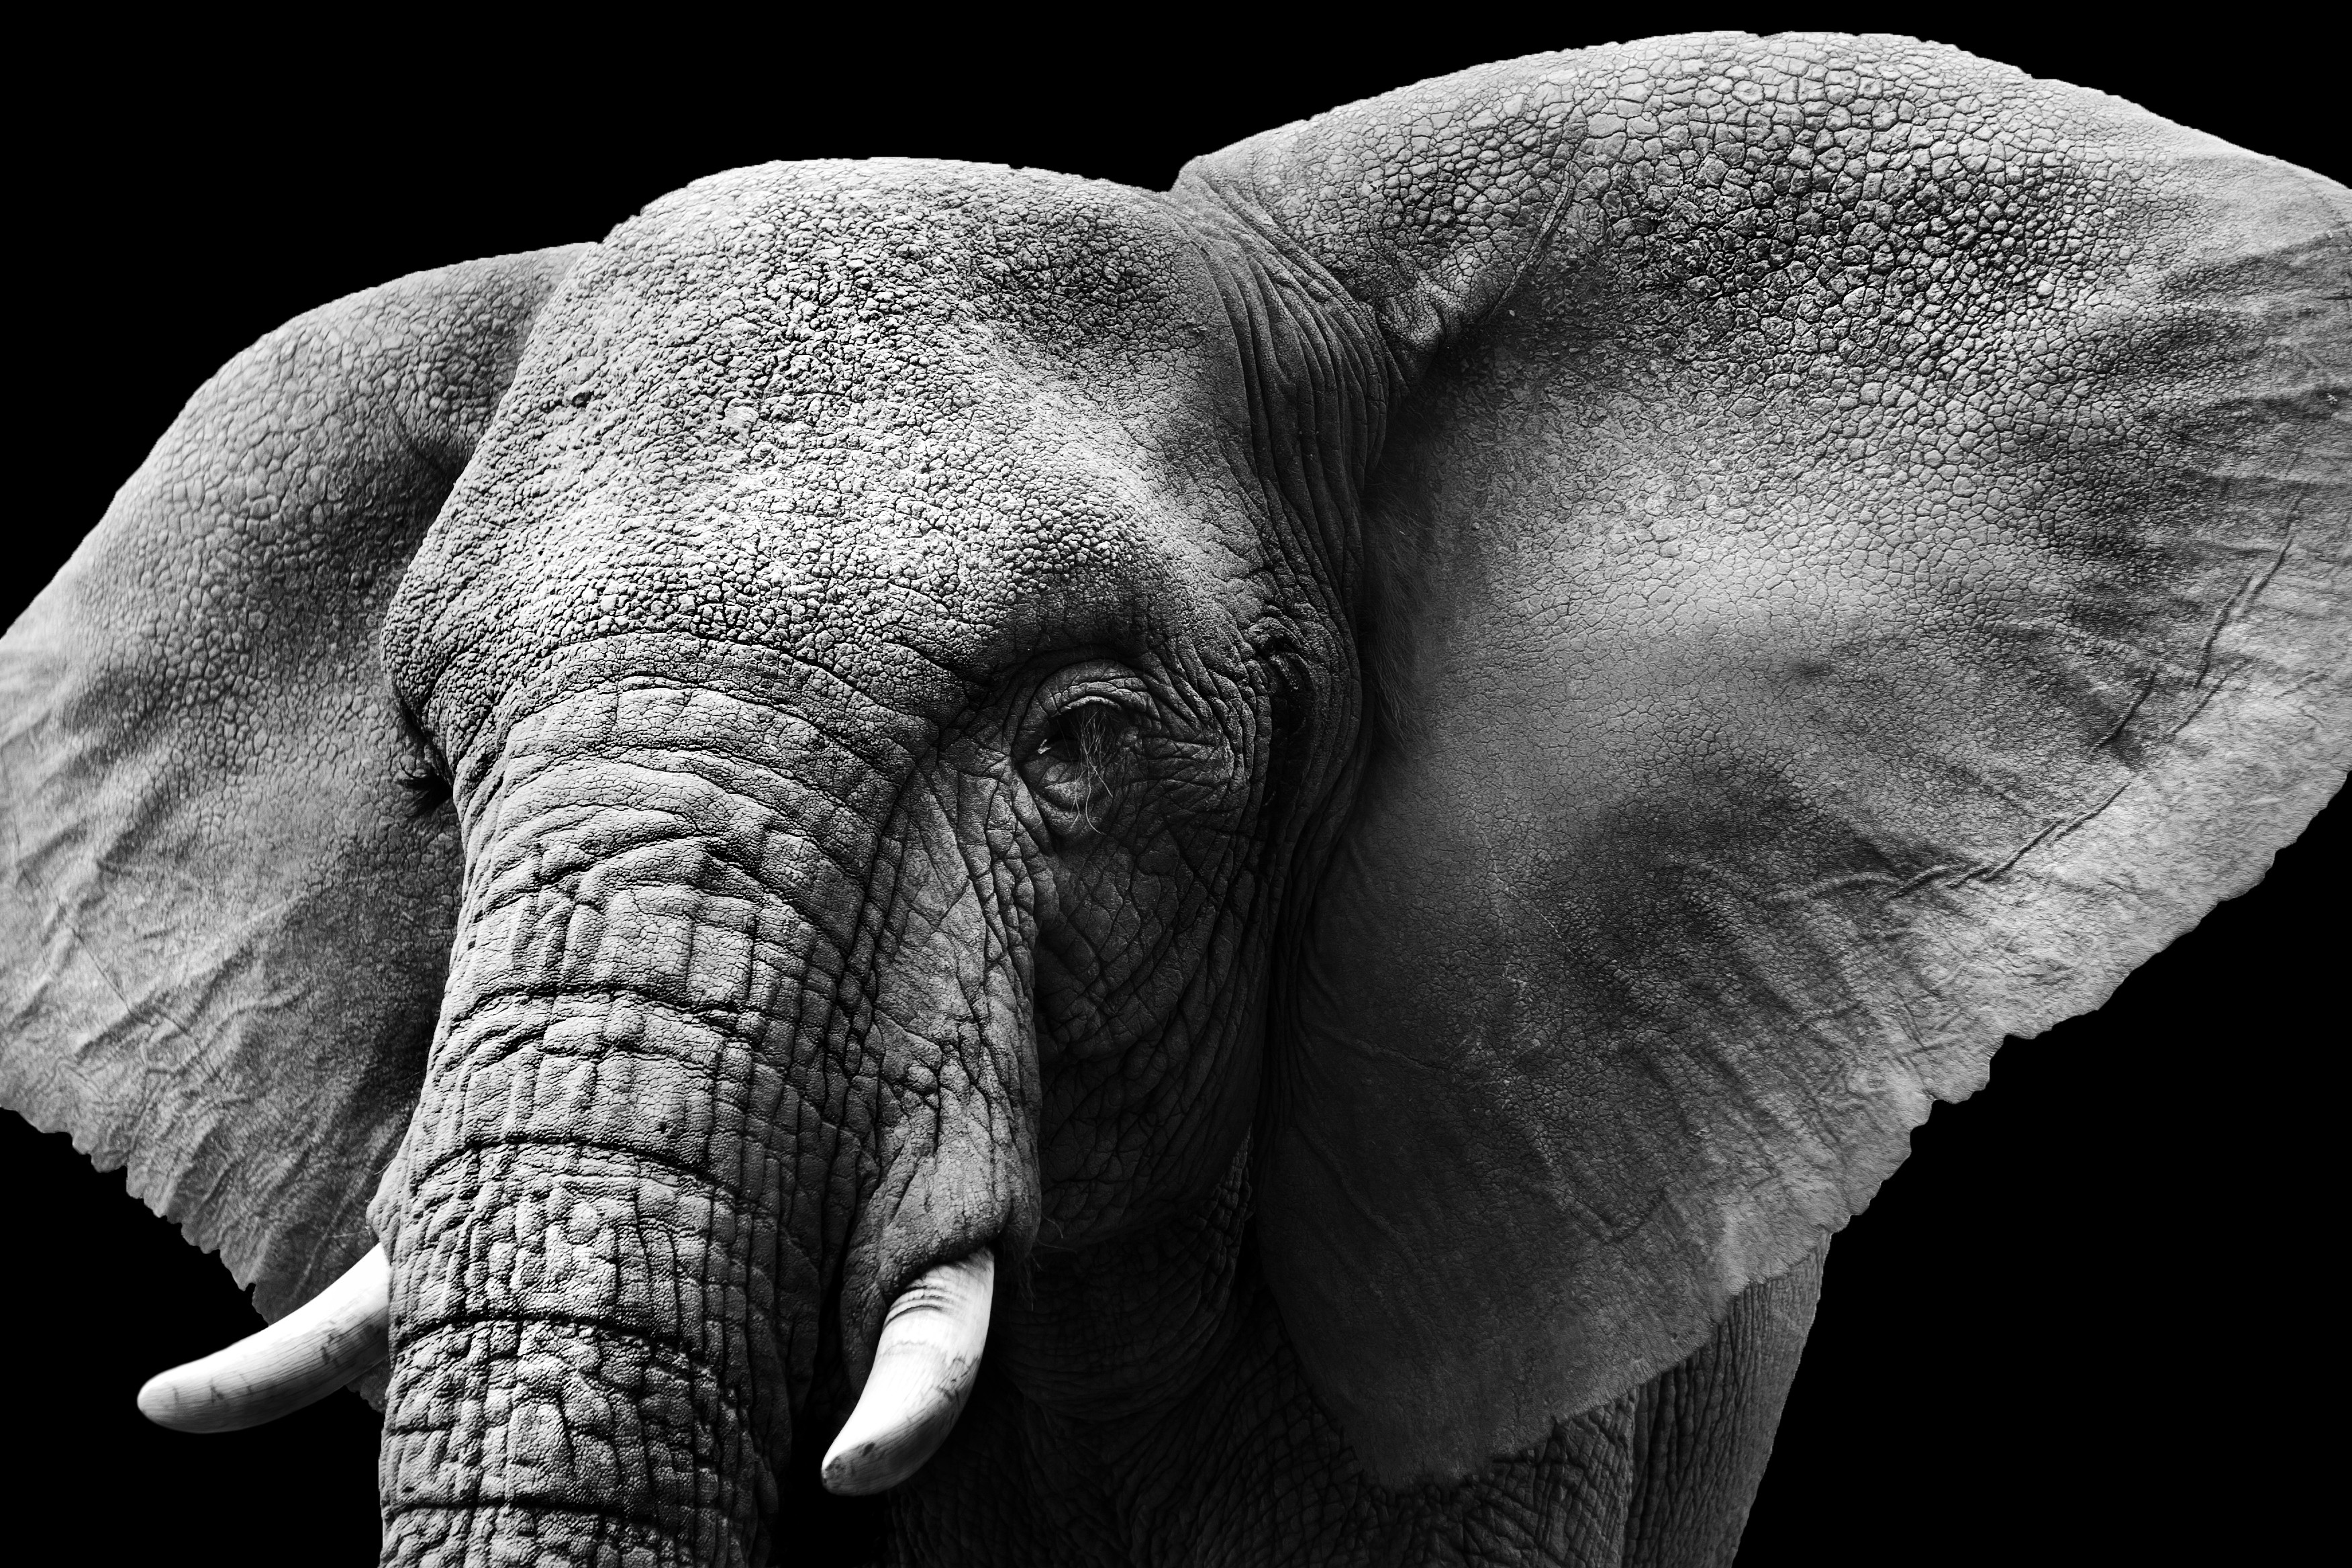 General 3504x2336 animals mammals elephant monochrome nature